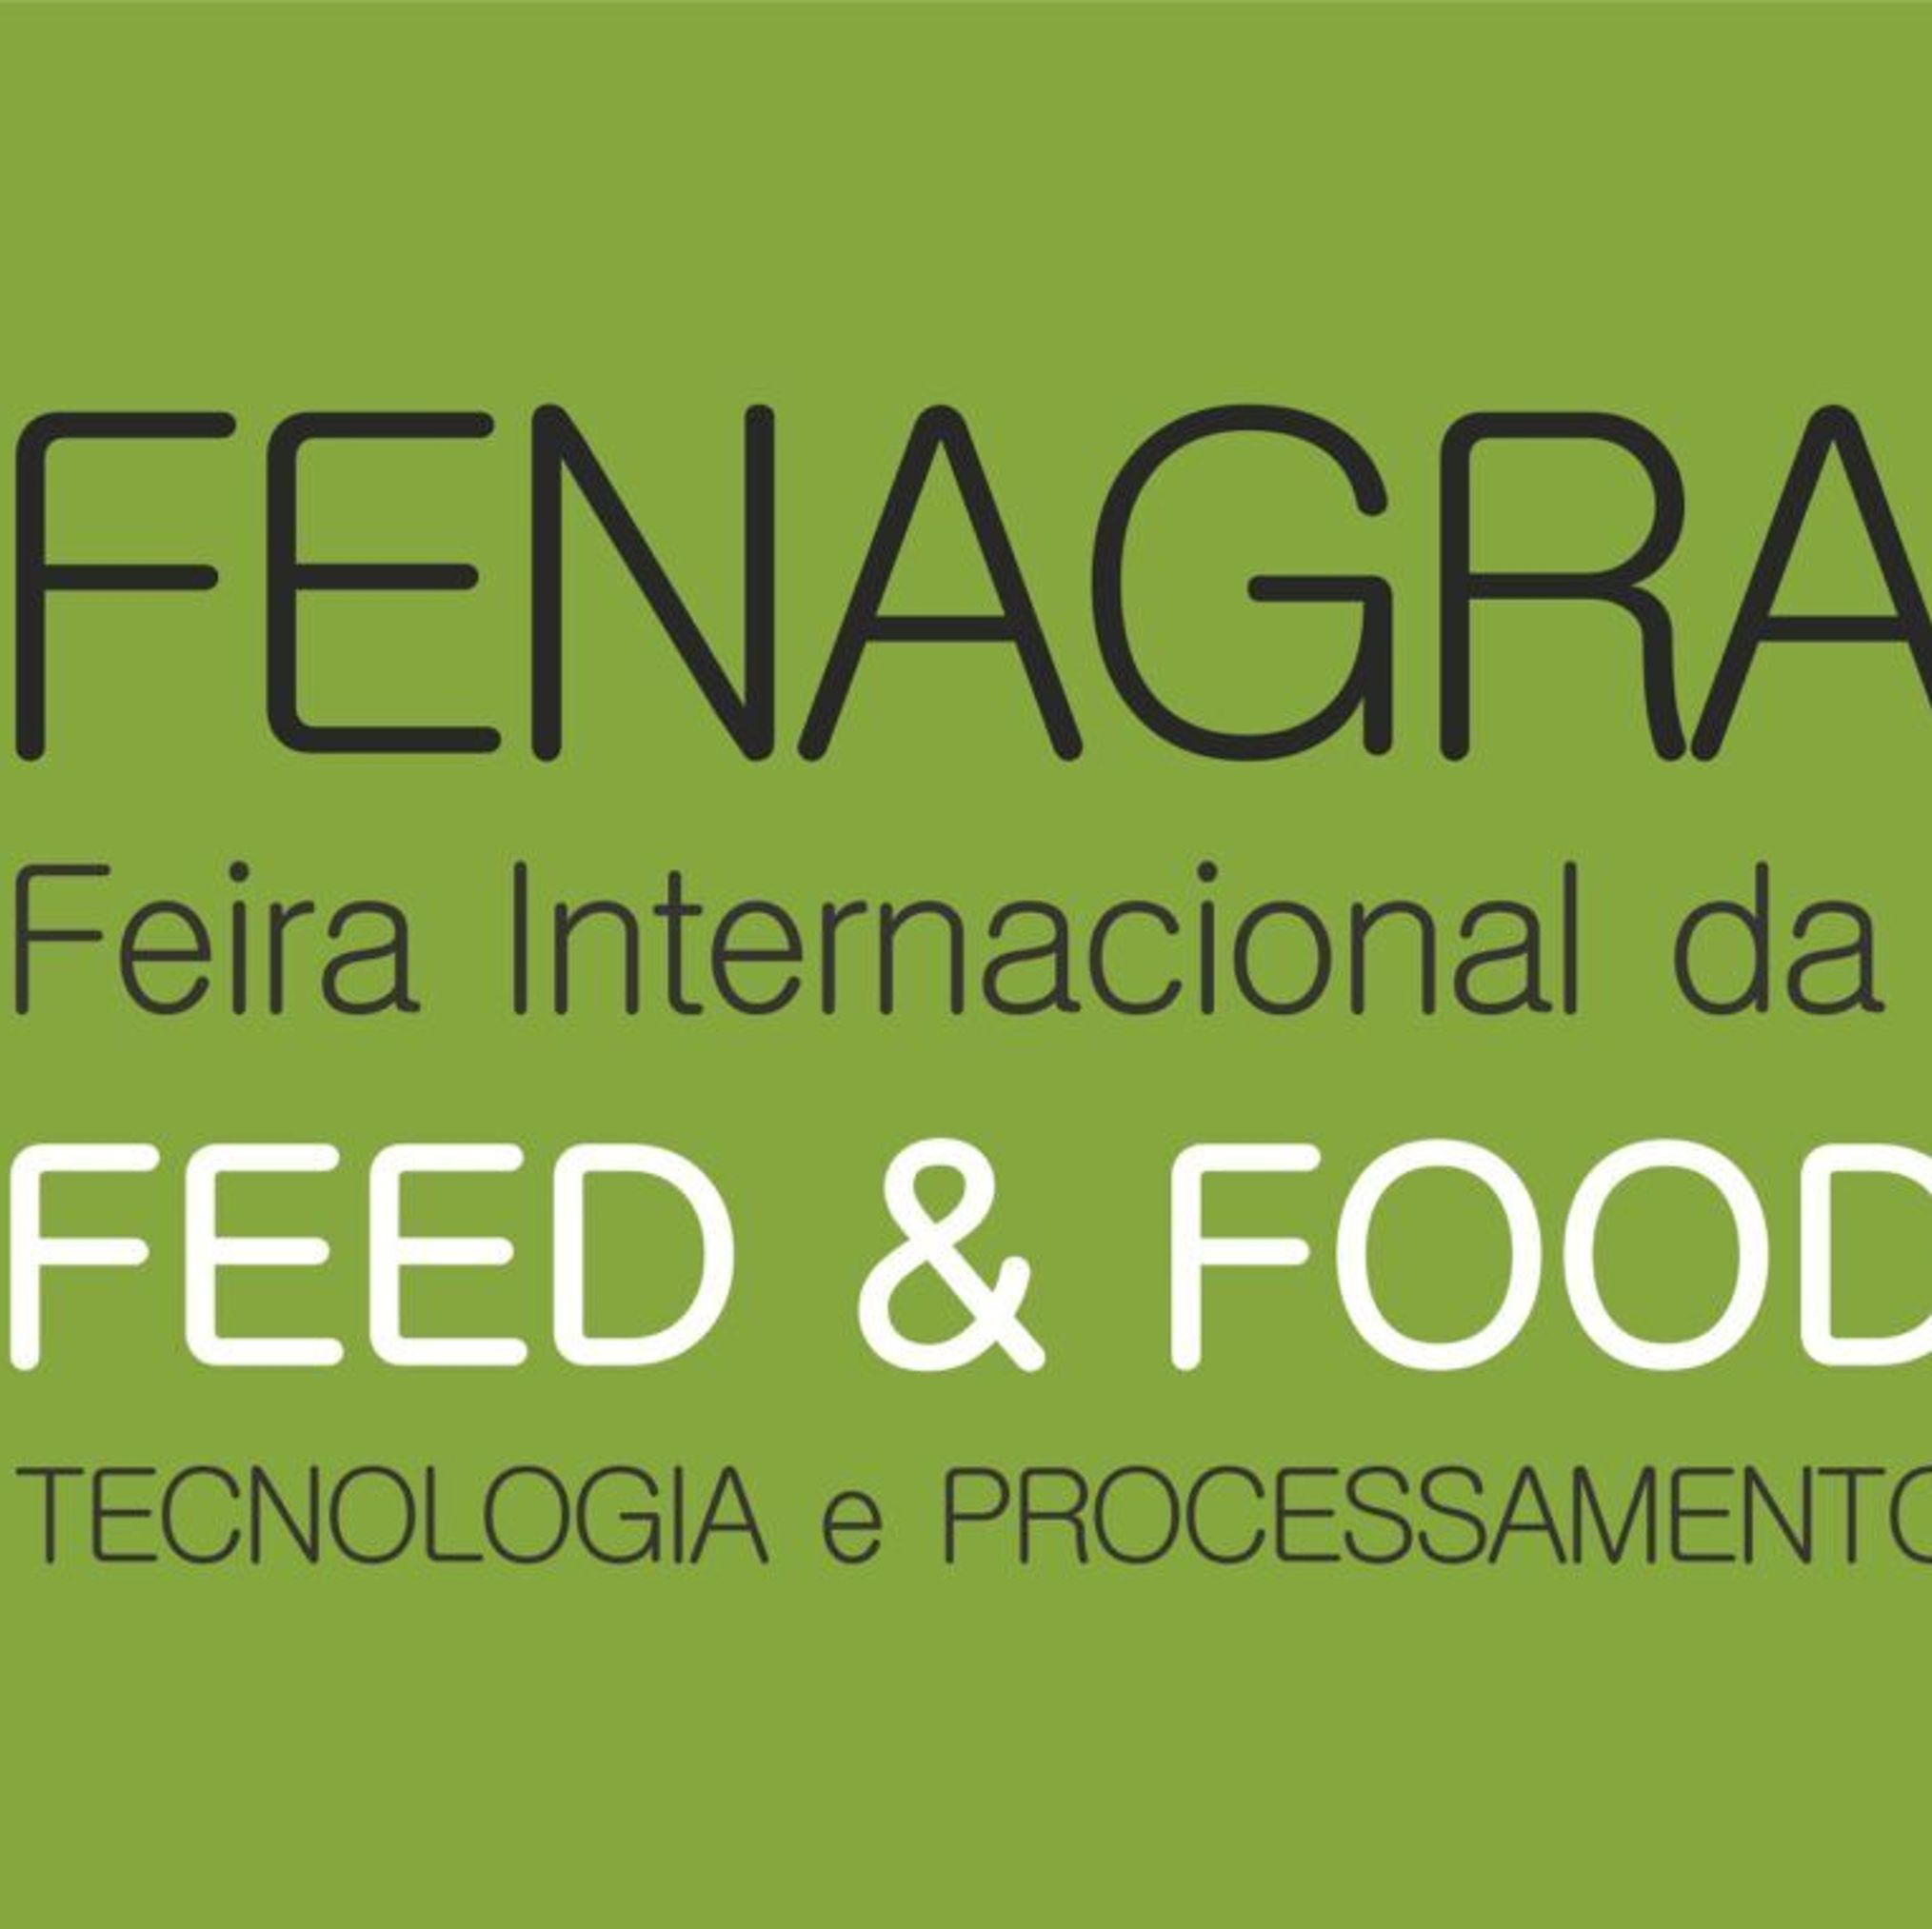 Fenagra